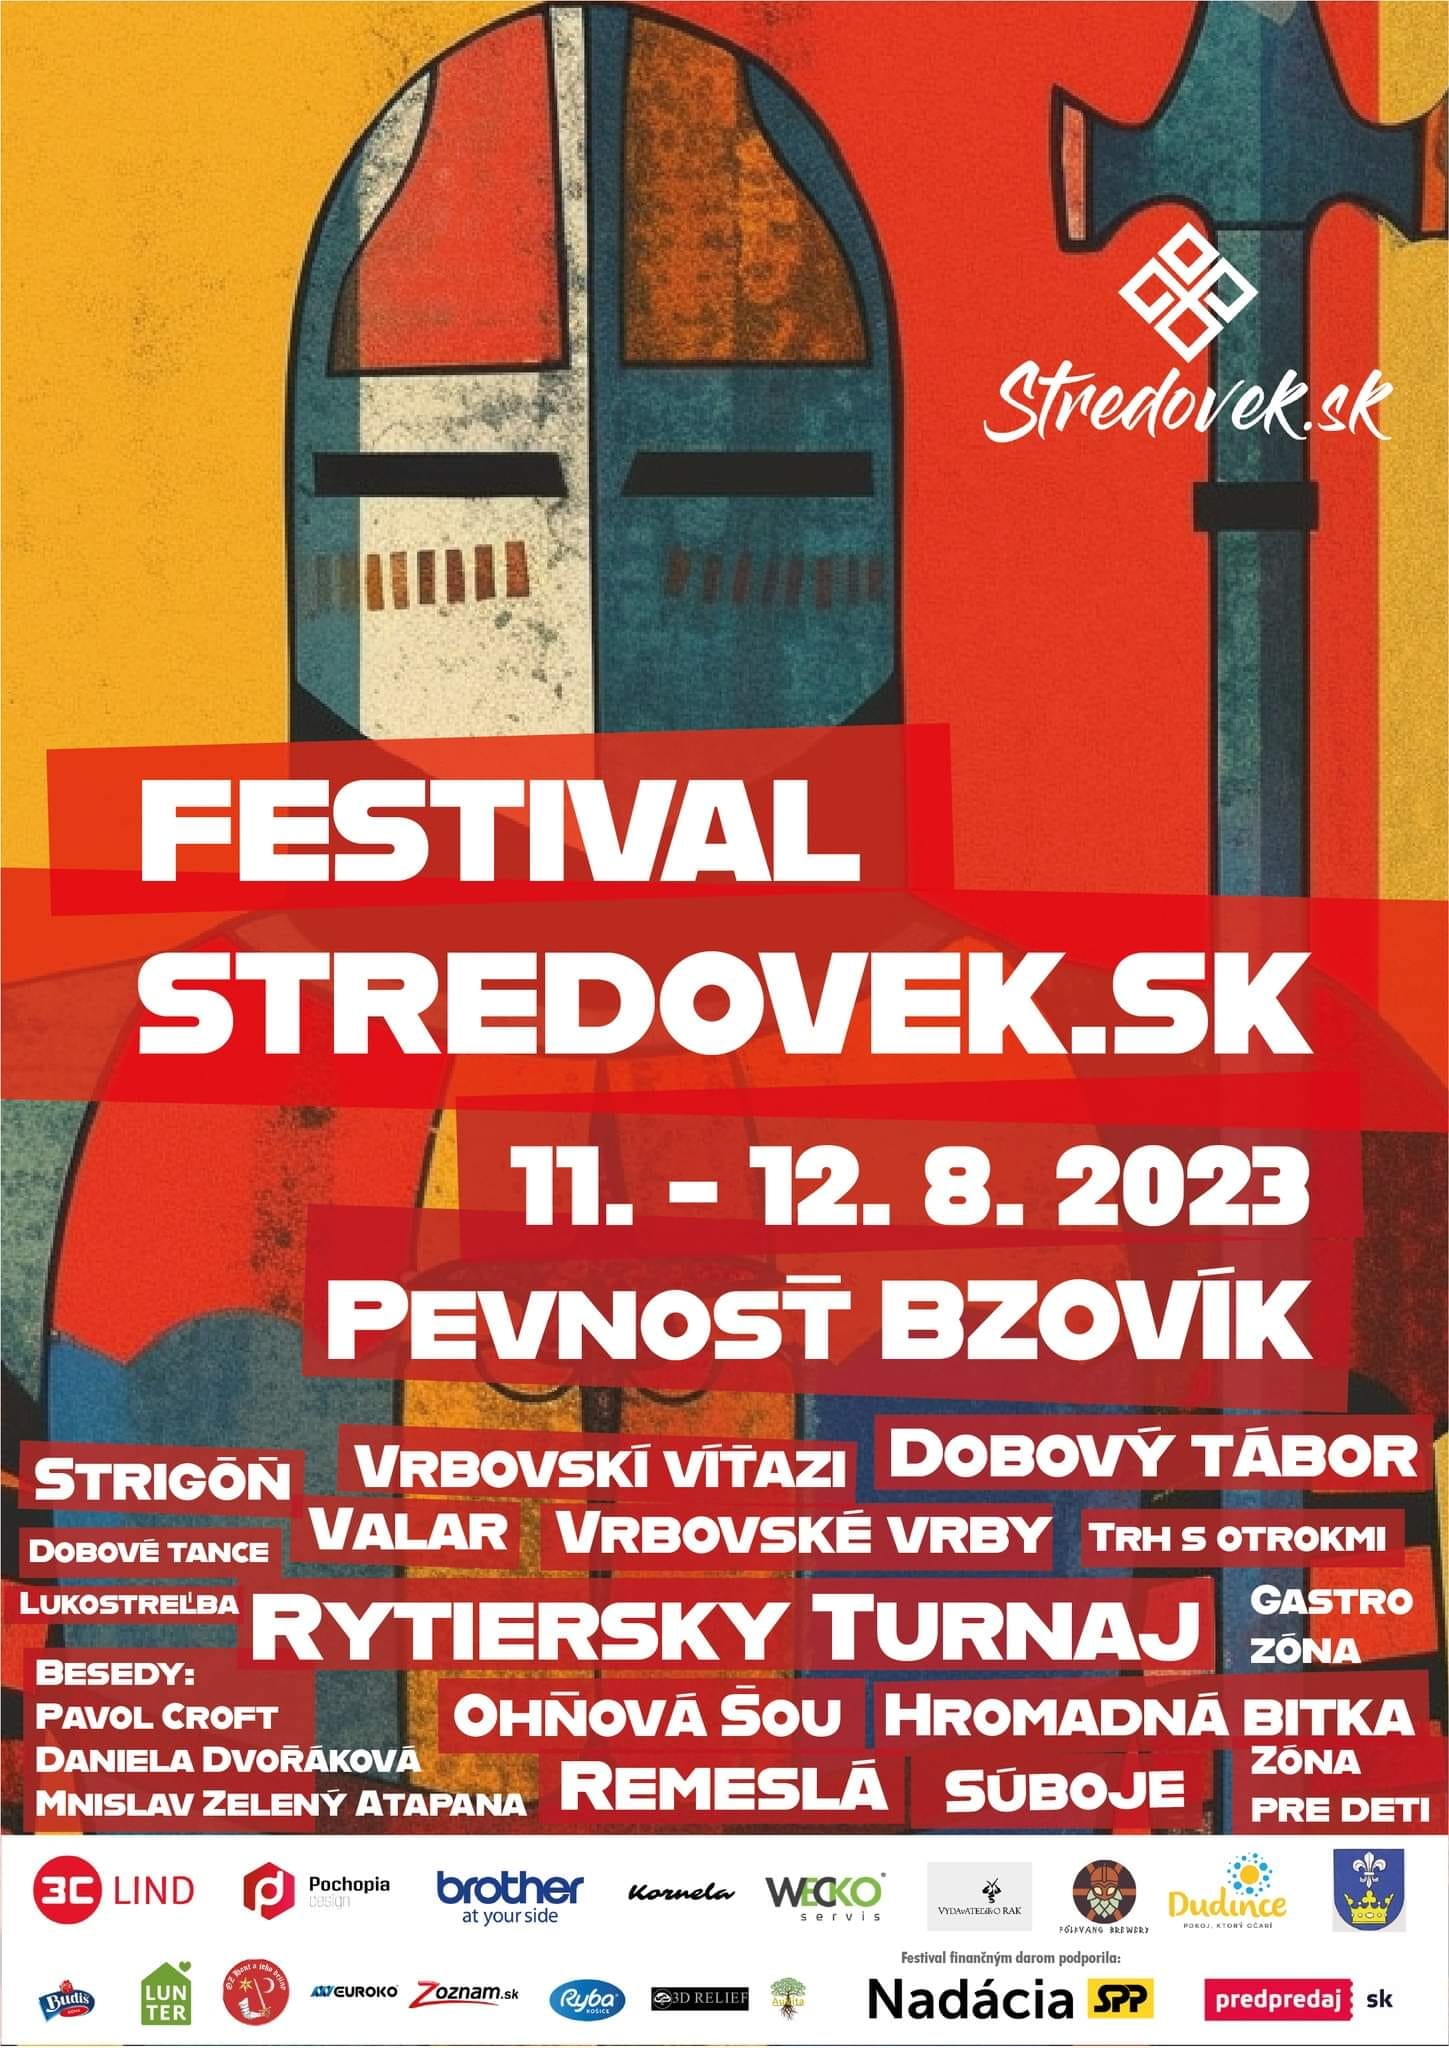 Festival Stredovek.sk 2023 Bzovk